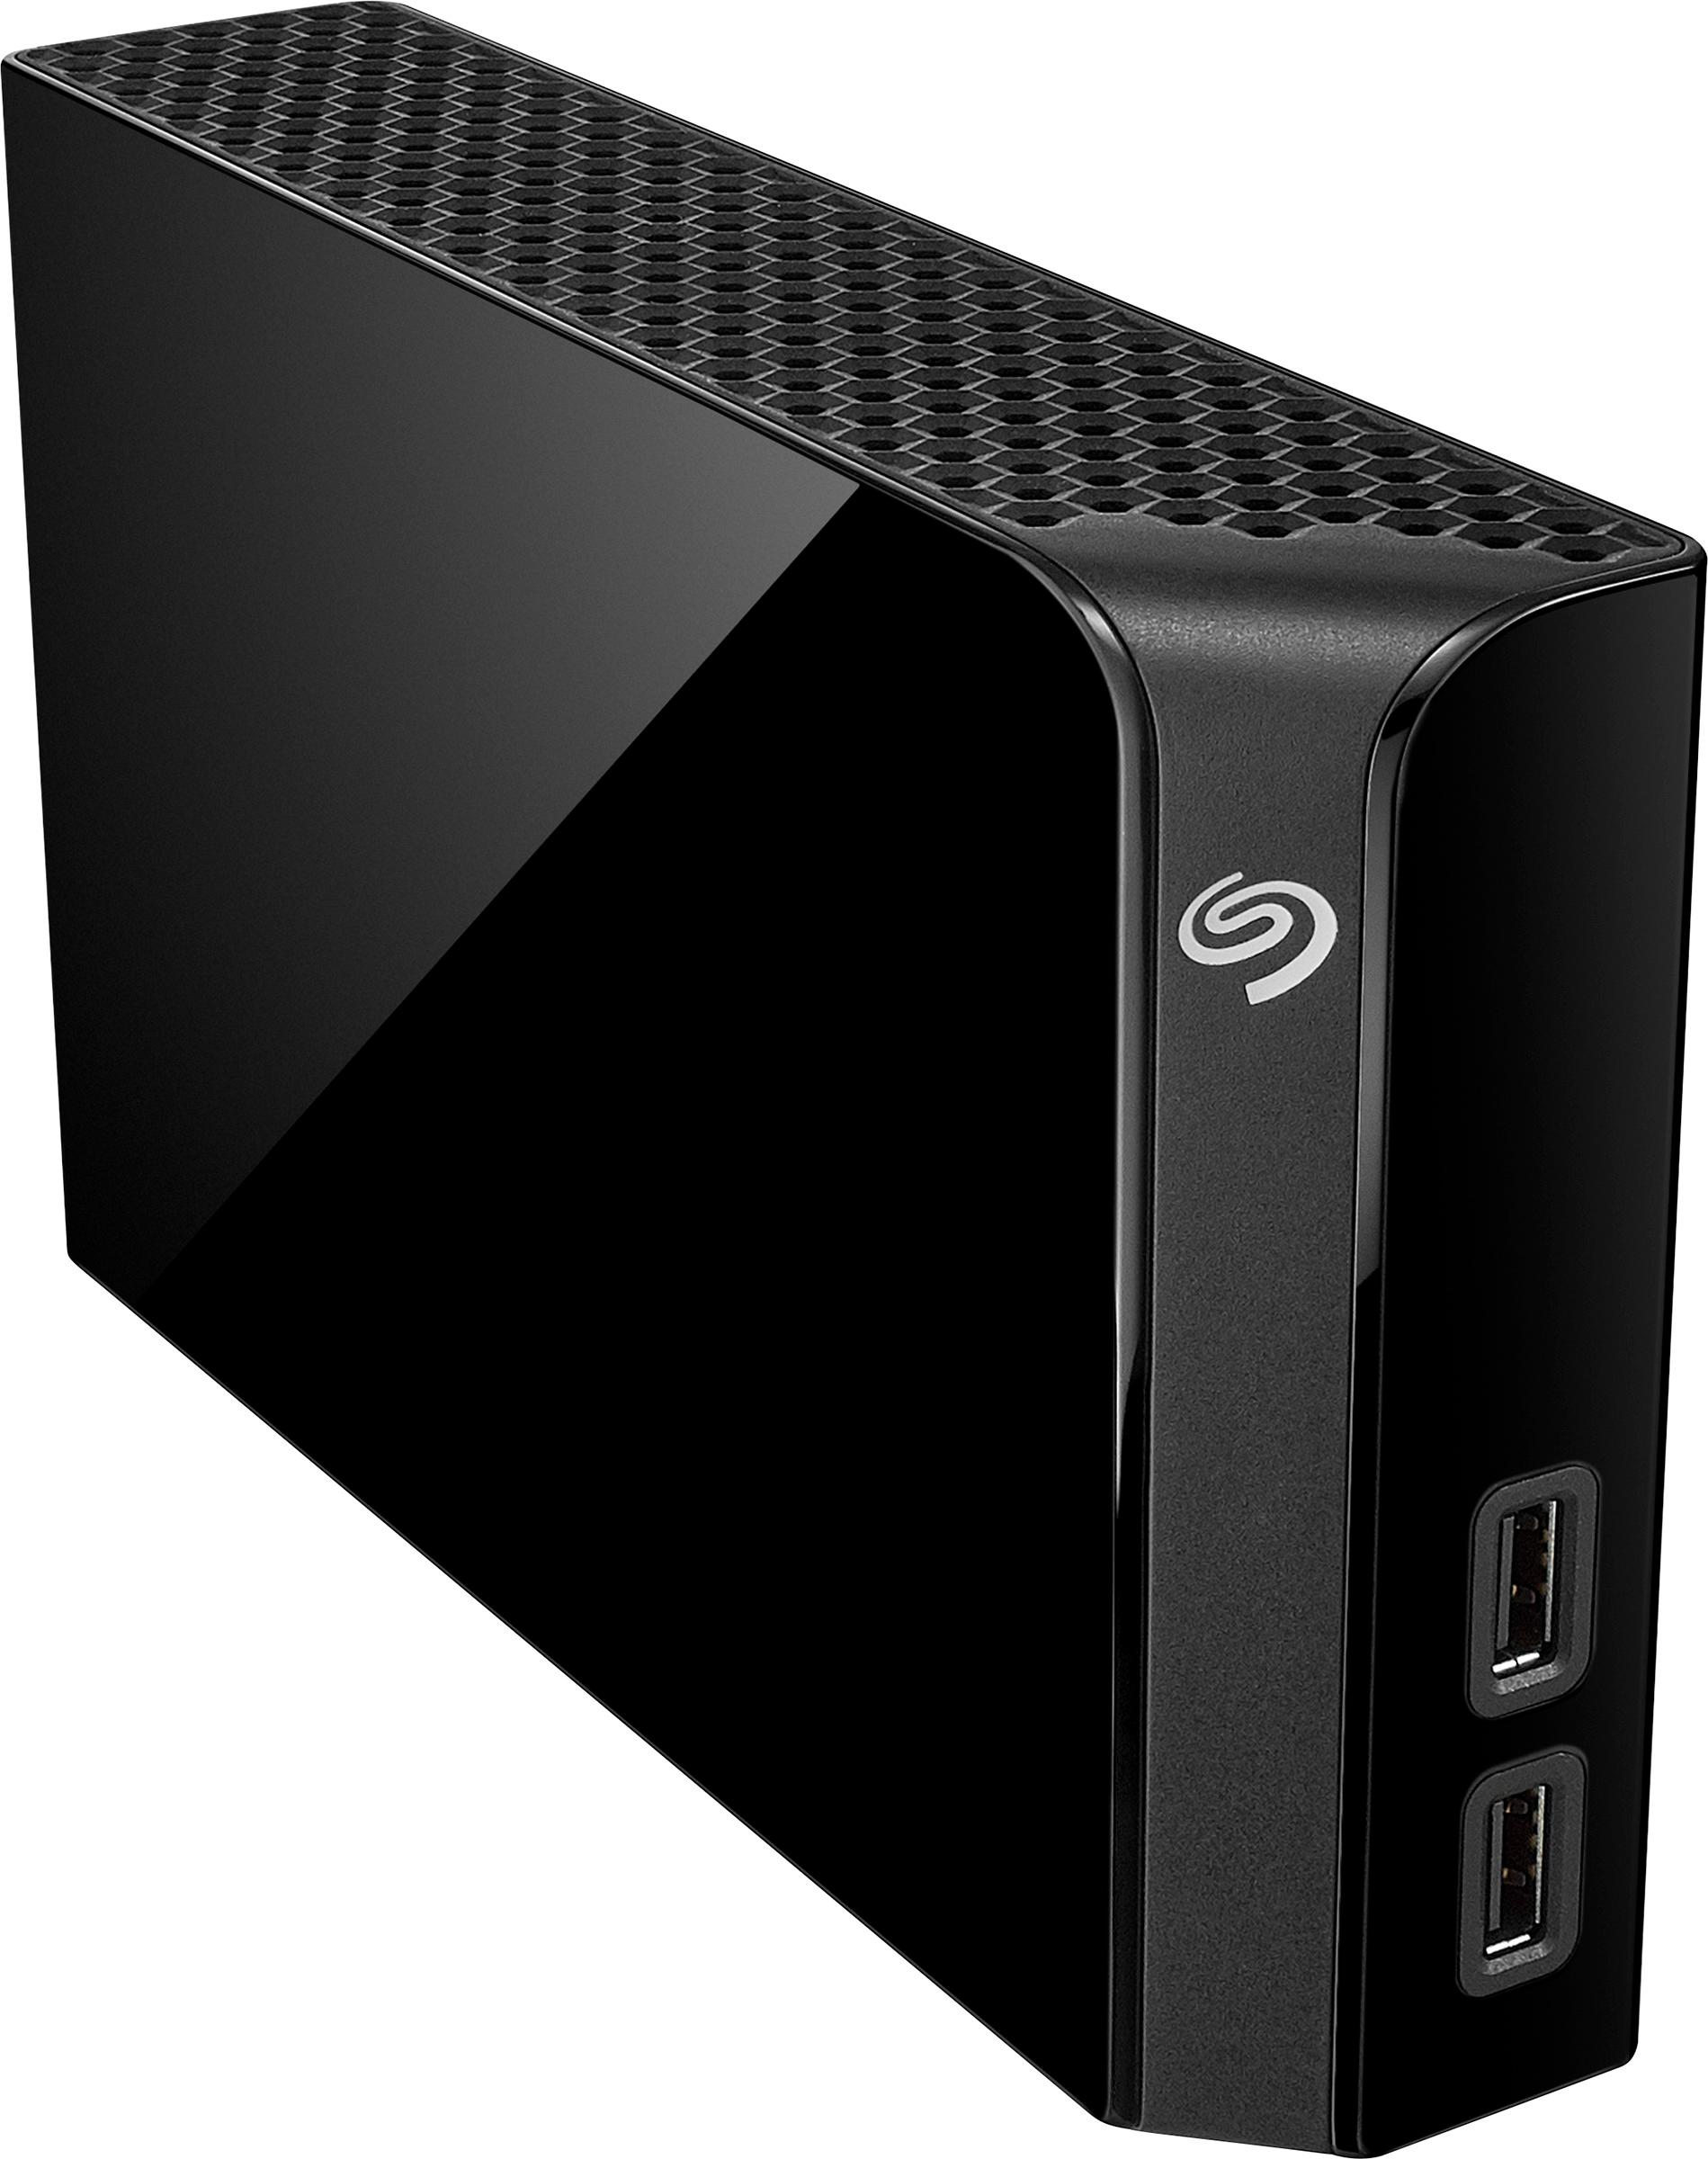 Seagate Backup Plus Hub 6TB External Desktop Hard Drive Storage STEL6000100 